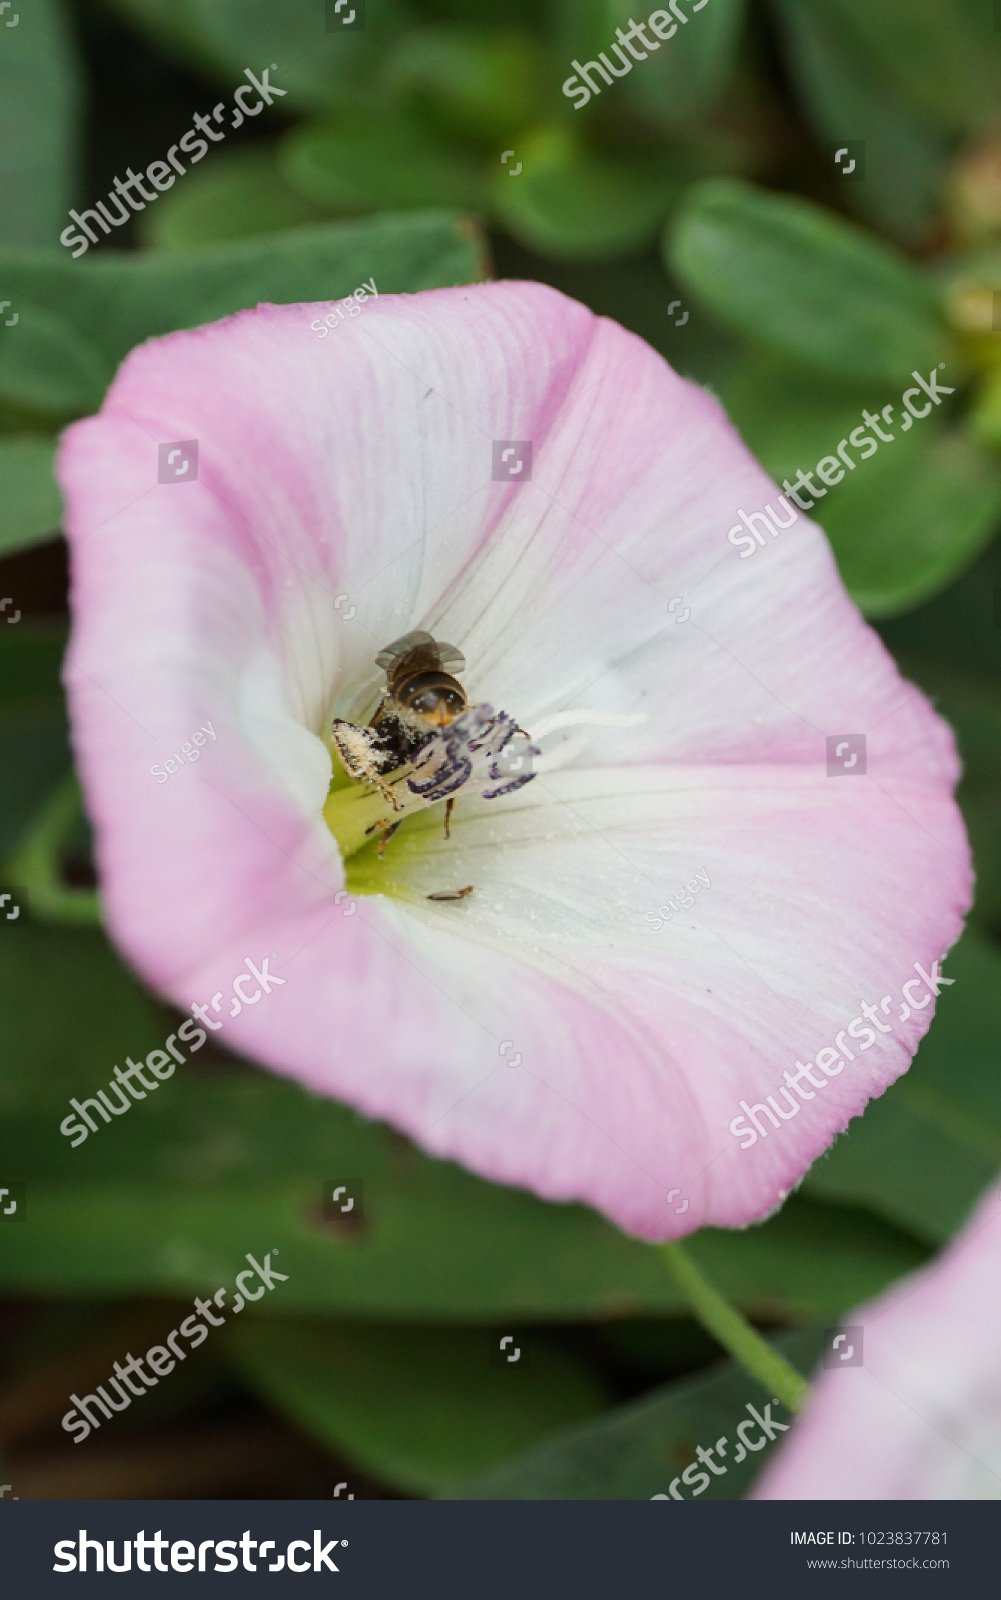  Macro Caucasian Caucasian Caucasian bee Andrena nitidiuscula collecting pollen and nectar in stamens inside a white and pink convolvulus Strophocaulos                               #1023837781